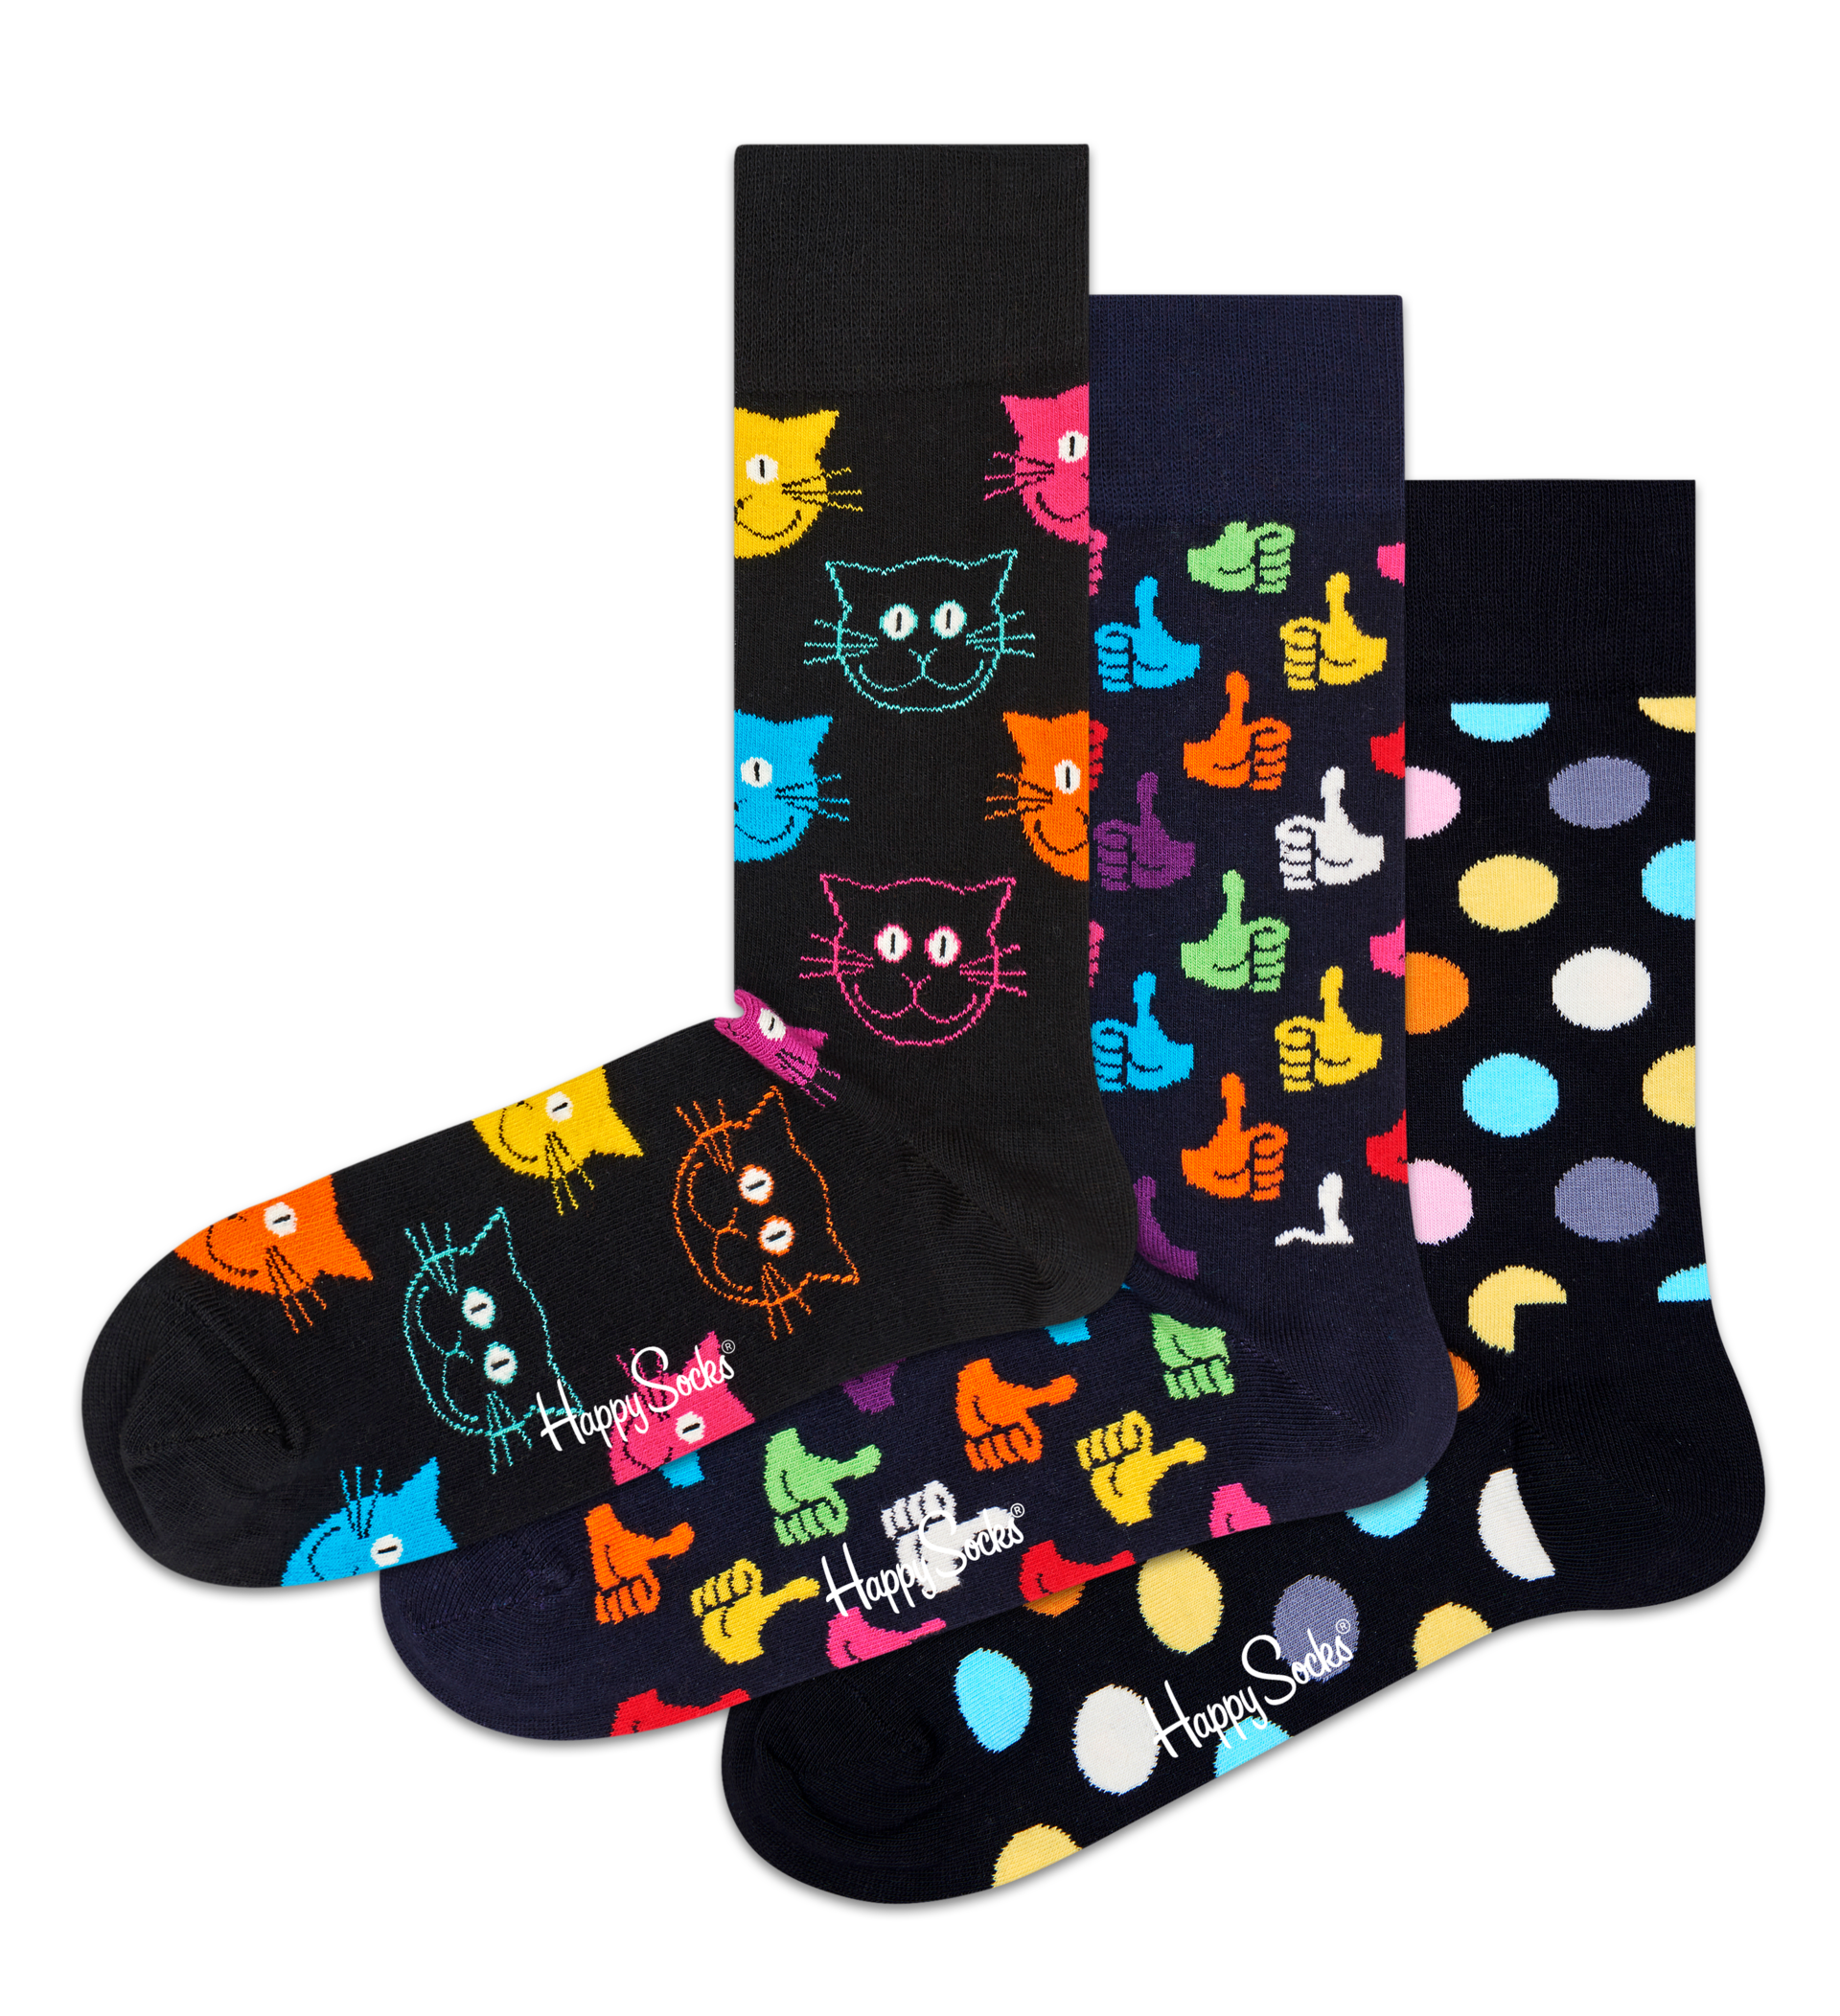 Colorful Socks Cat lover Socks Men Women Funny Happy Socks Gift Idea Happy Birthday Cat Socks Gift Bold Cool